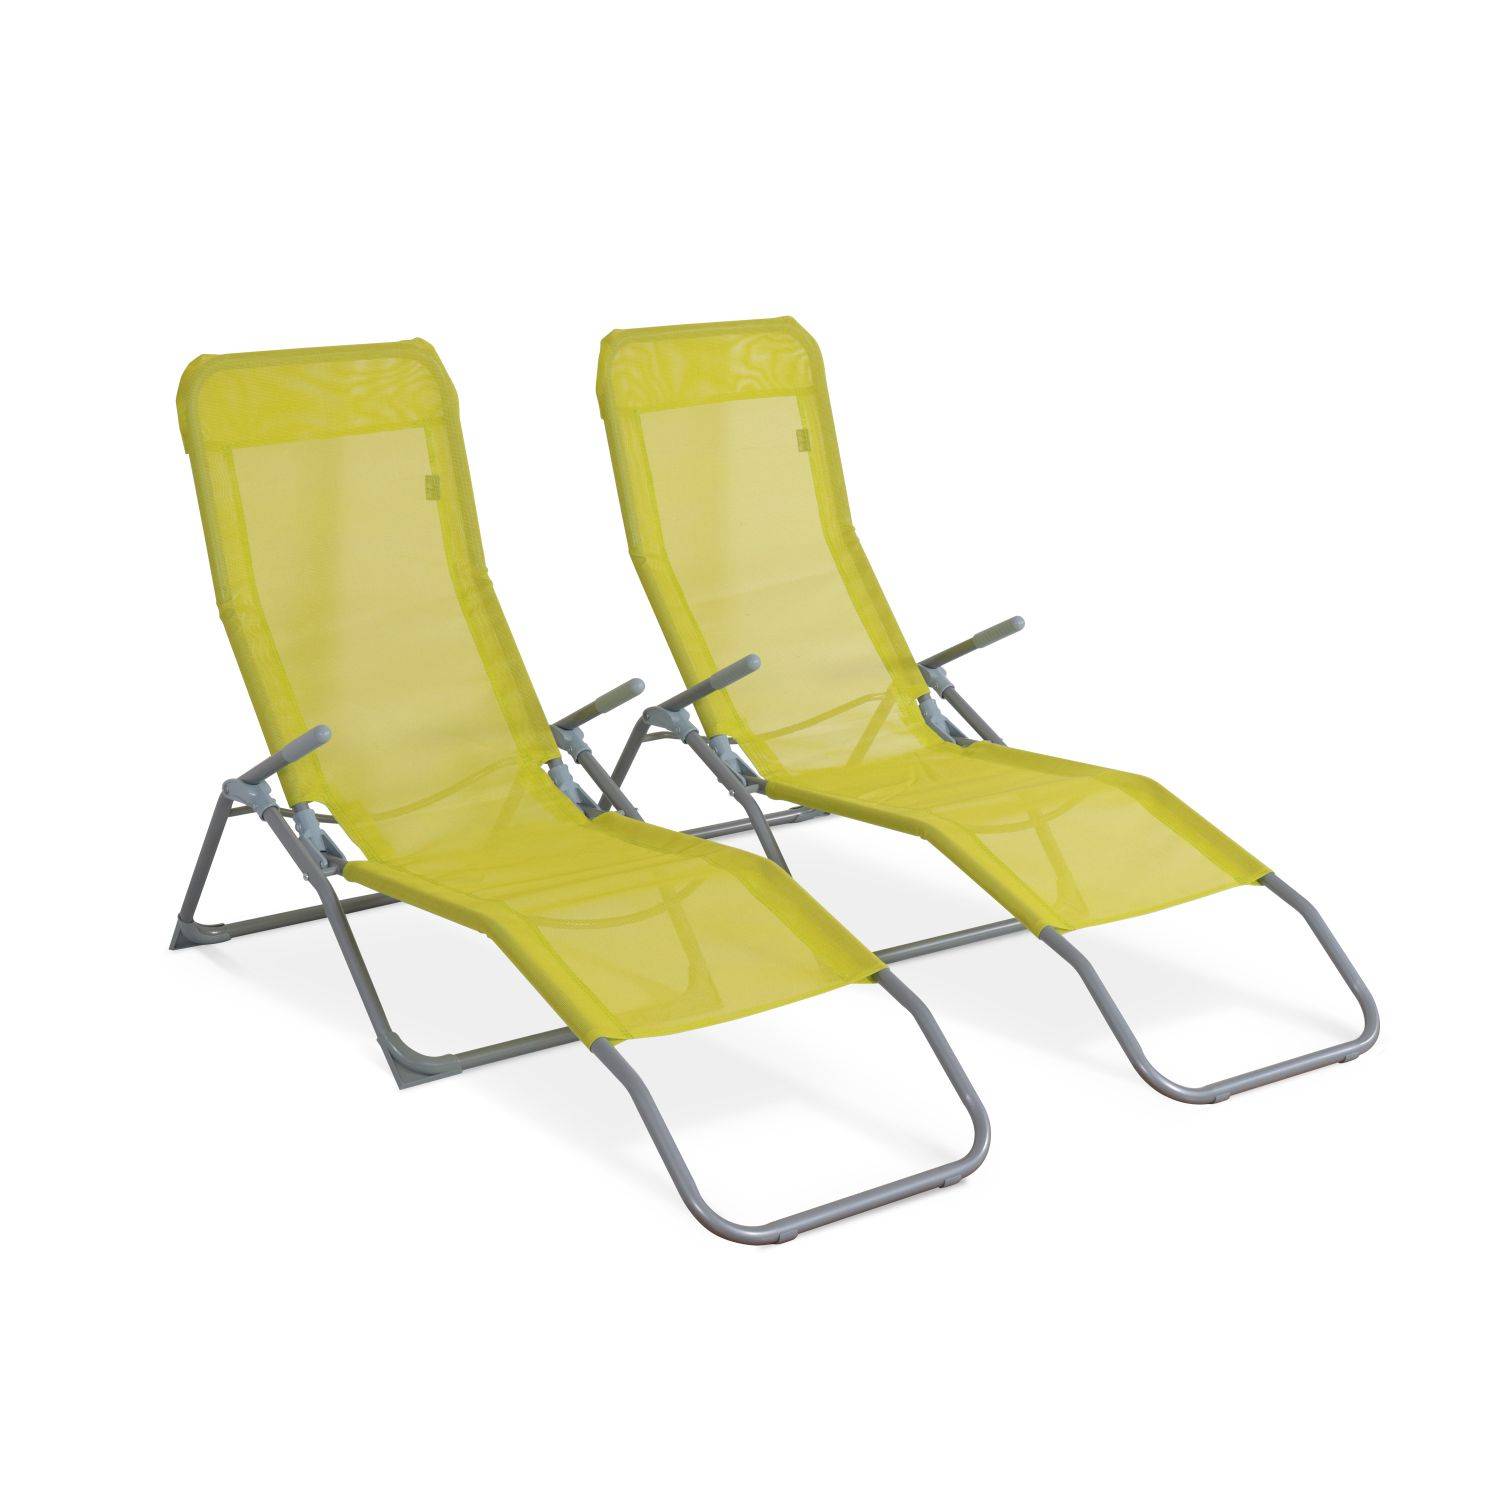 Set van 2 opvouwbare ligstoelen - Levito Anijsgroen - Ligstoelen van textileen, 2 posities, opvouwbare ligstoelen Photo2